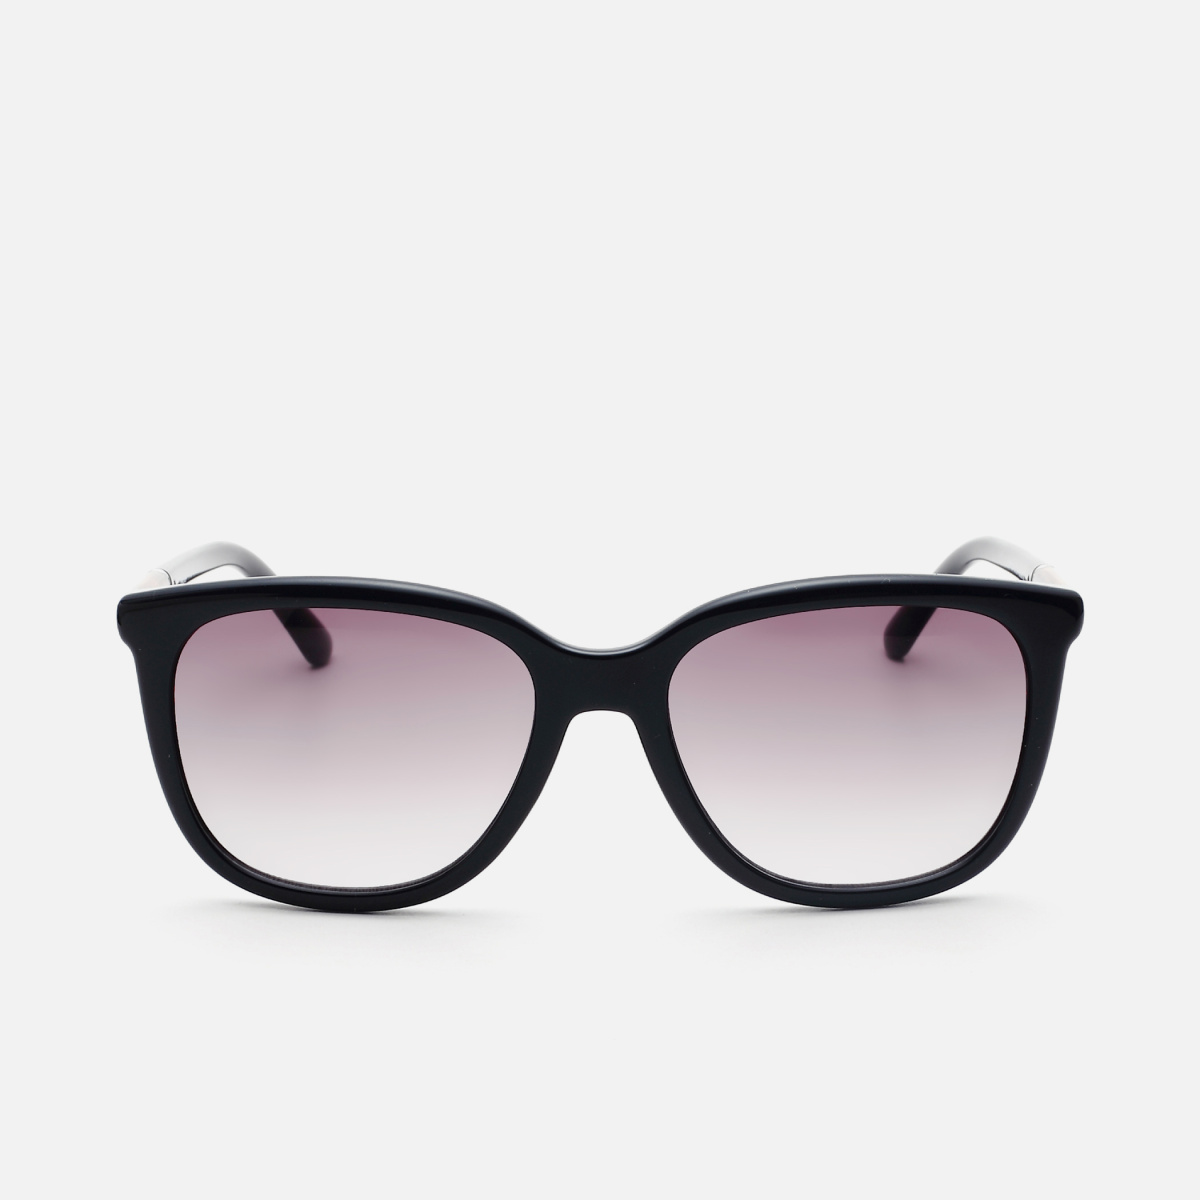 BEBE Women UV-Protected Round Sunglasses - BEBE3052C1S